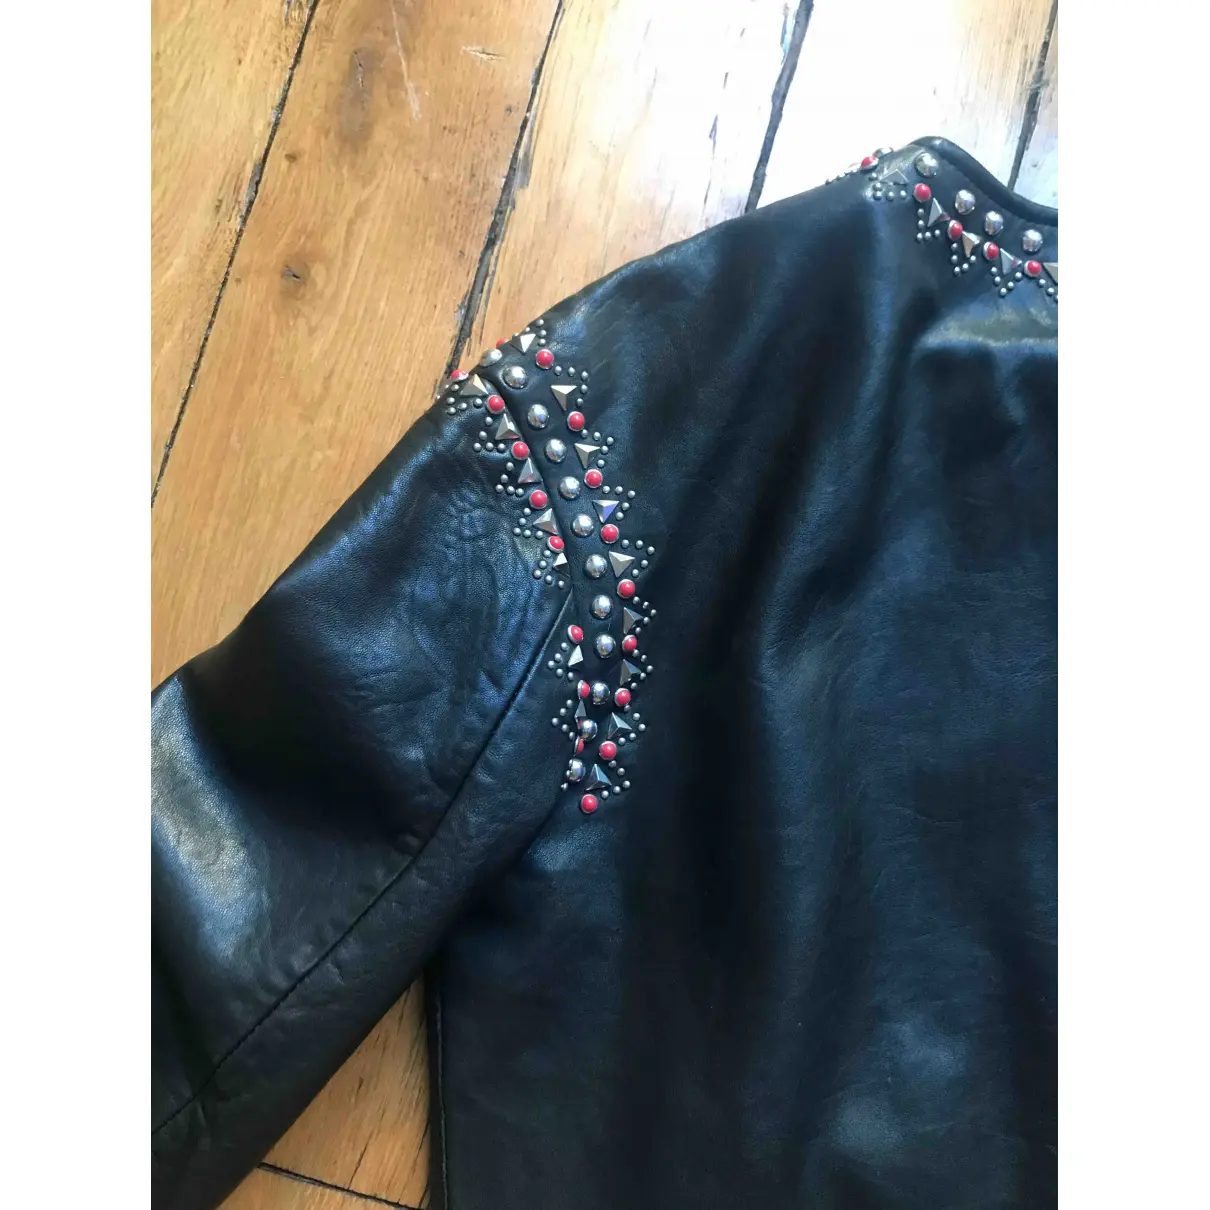 Buy Isabel Marant Etoile Leather biker jacket online